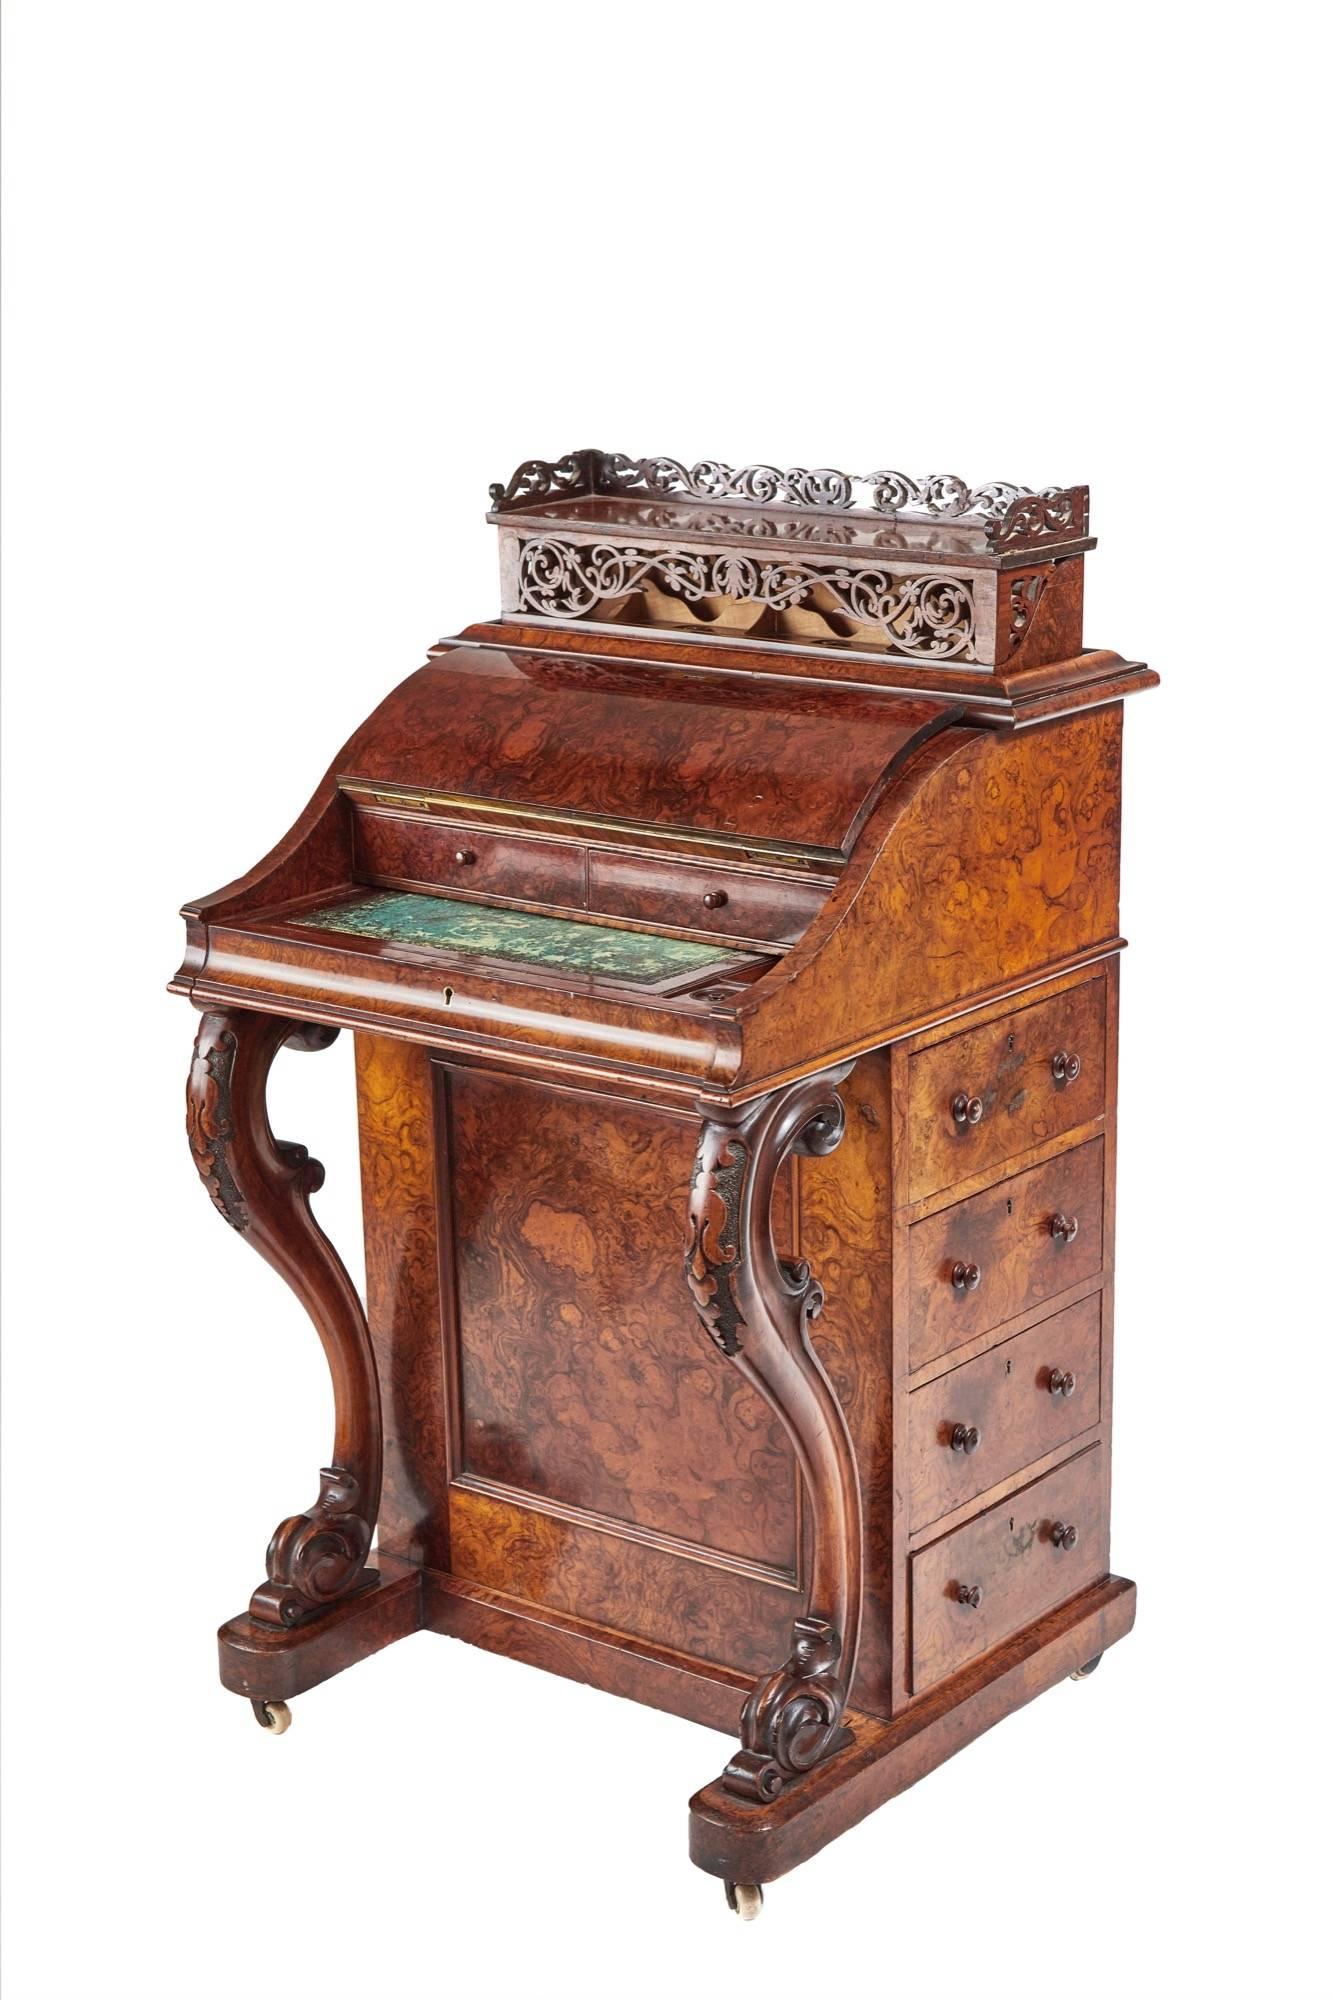 European Fine Quality 19th Century Burr Walnut Pop Up Davenport Writing Desk